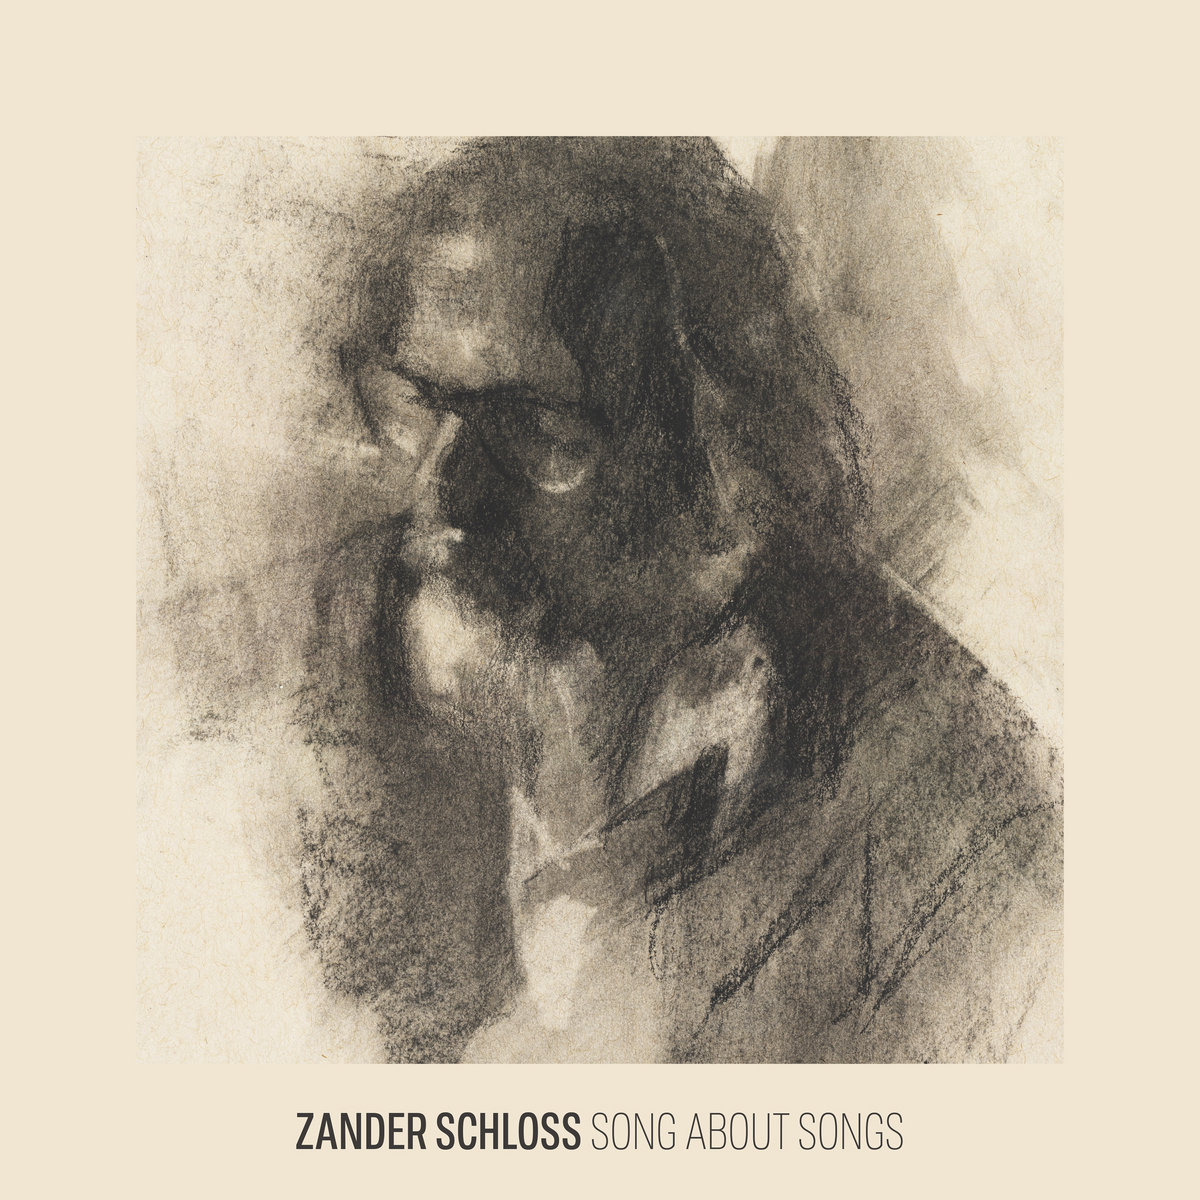 Zander Schloss Songs About Songs